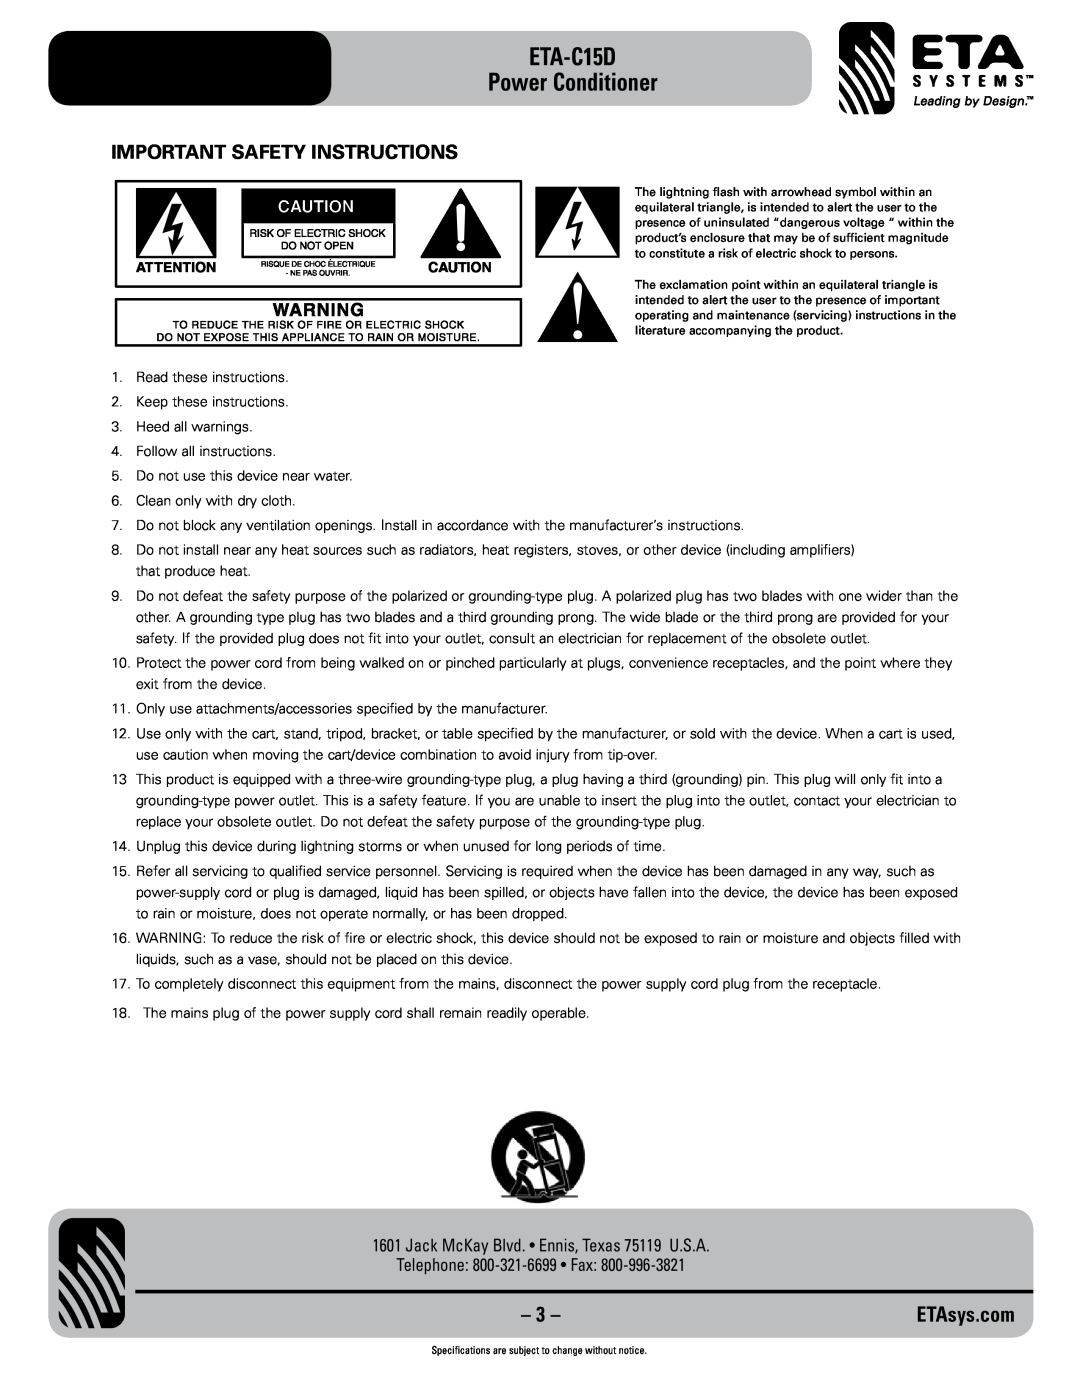 ETA Systems ETA C15D Important Safety Instructions, ETA-C15D Power Conditioner, Jack McKay Blvd. Ennis, Texas 75119 U.S.A 